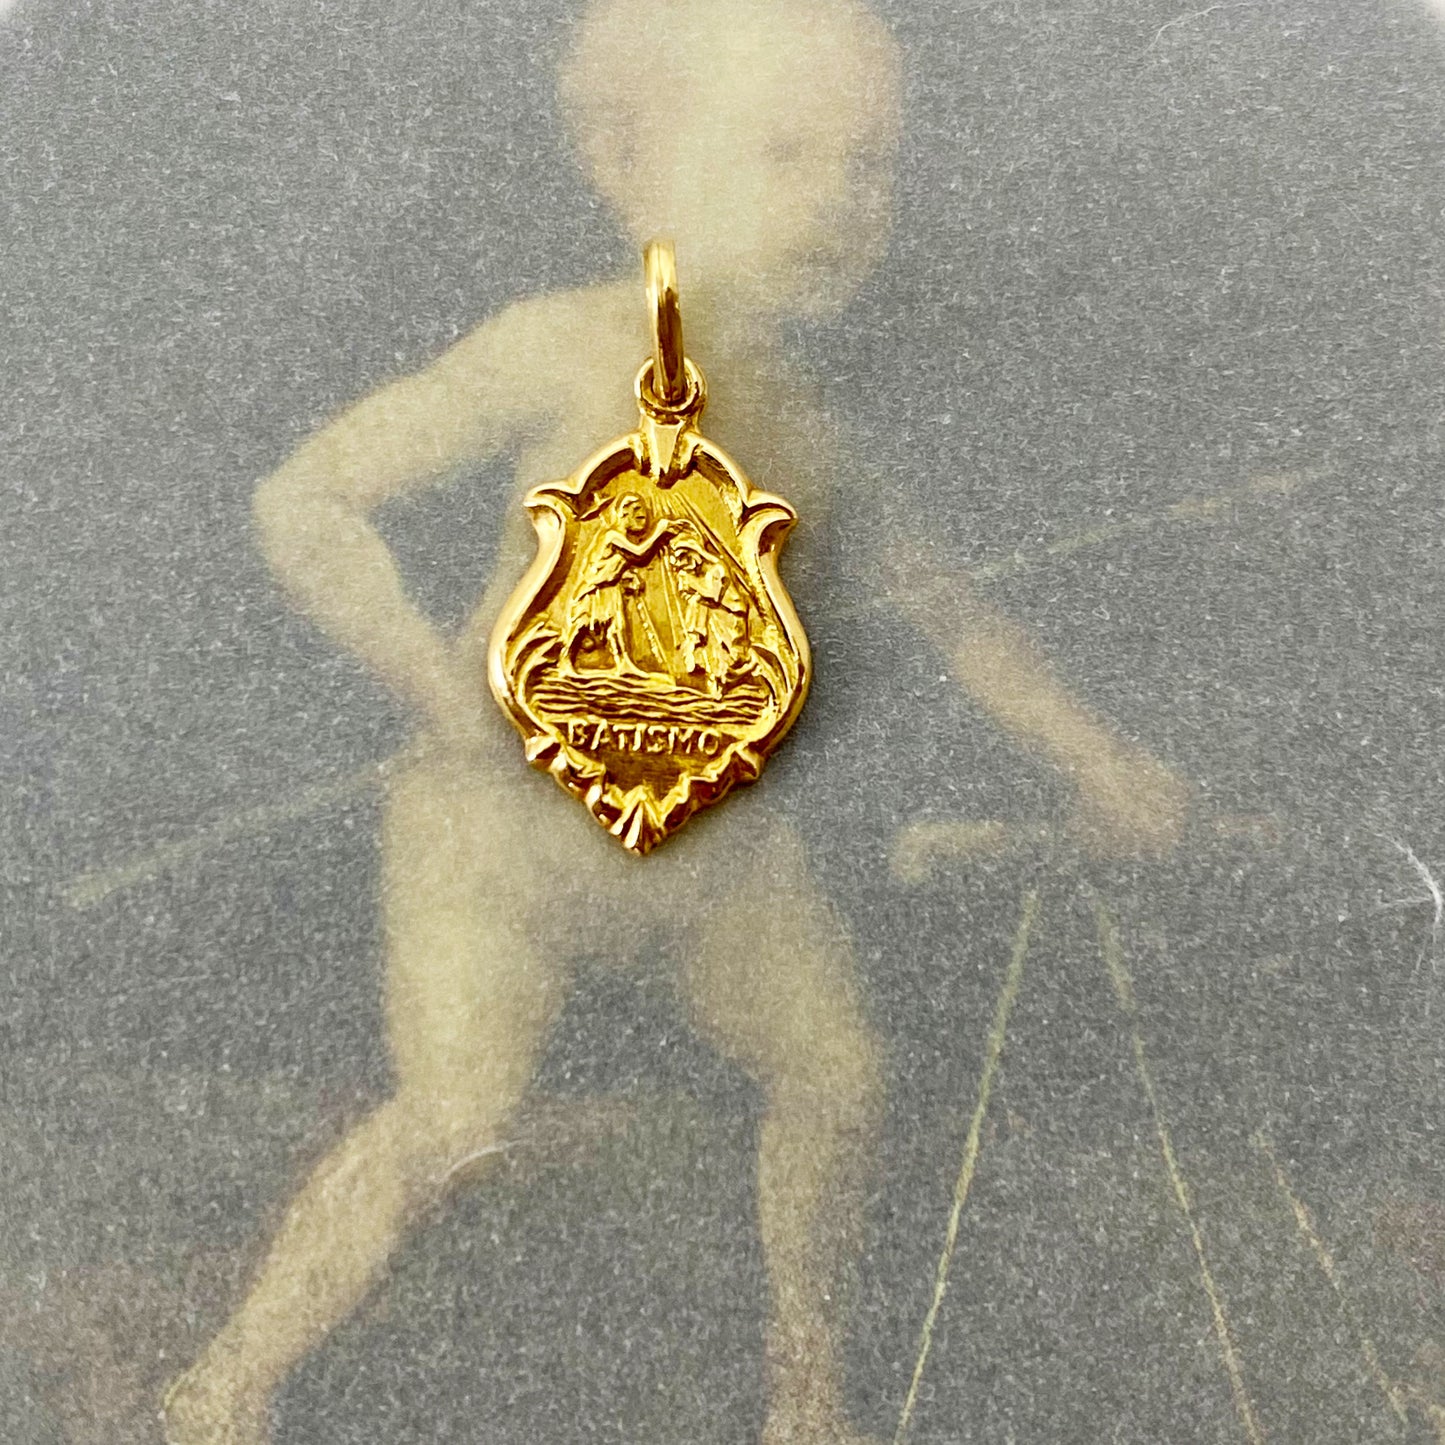 Antique 18K Gold Religious Medal